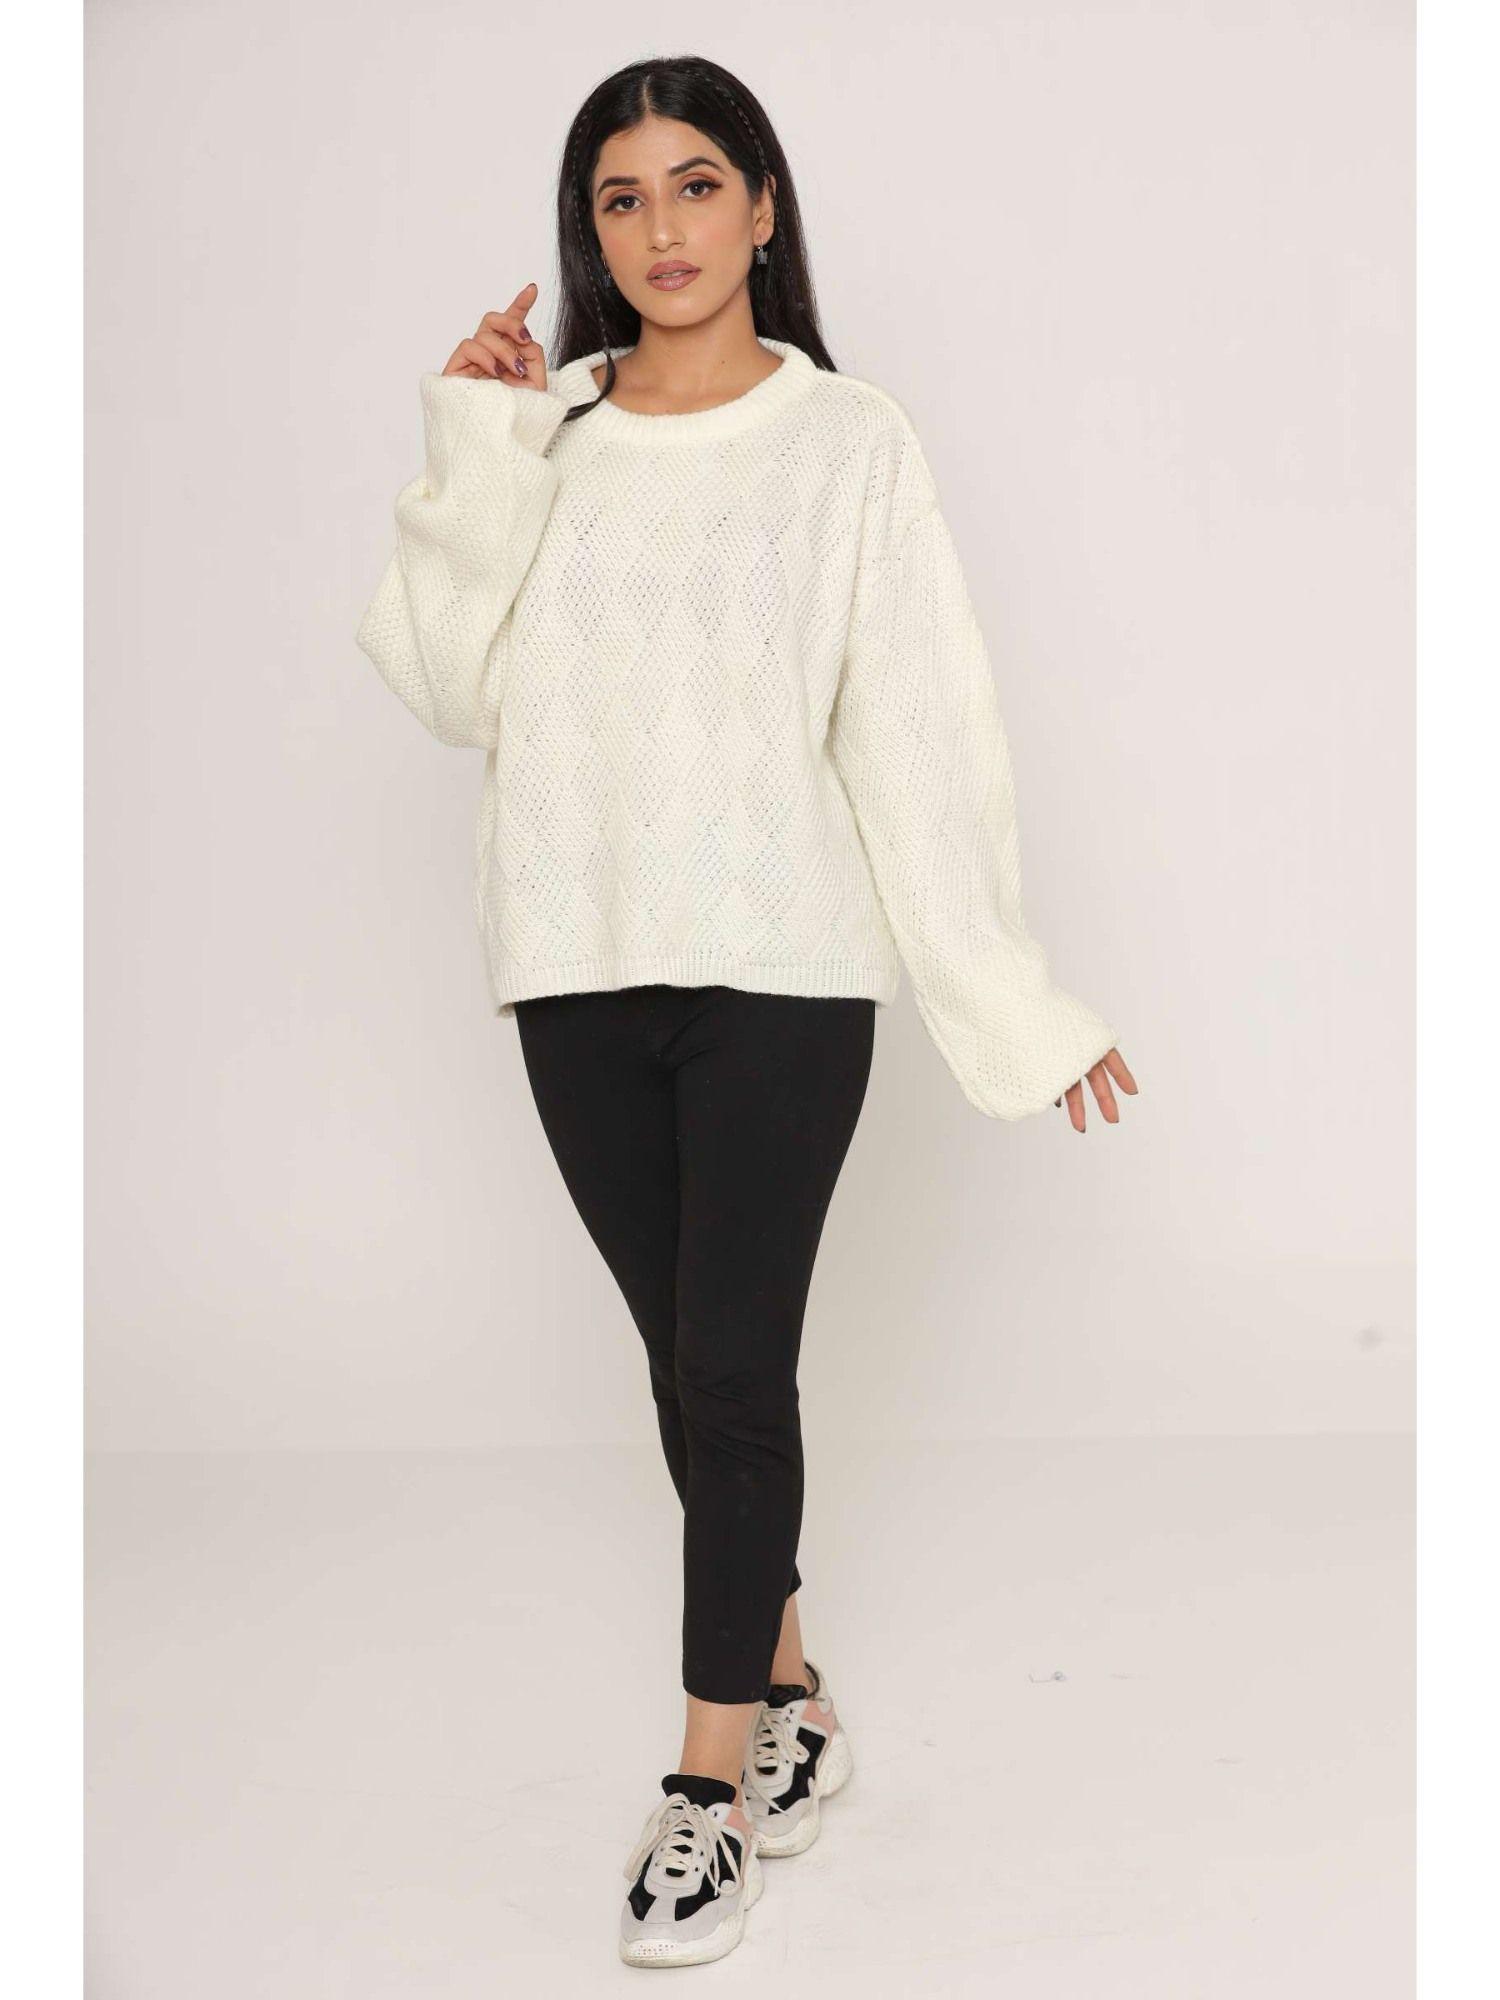 stylish oversized cable knit drop shoulders woollen sweaters for women